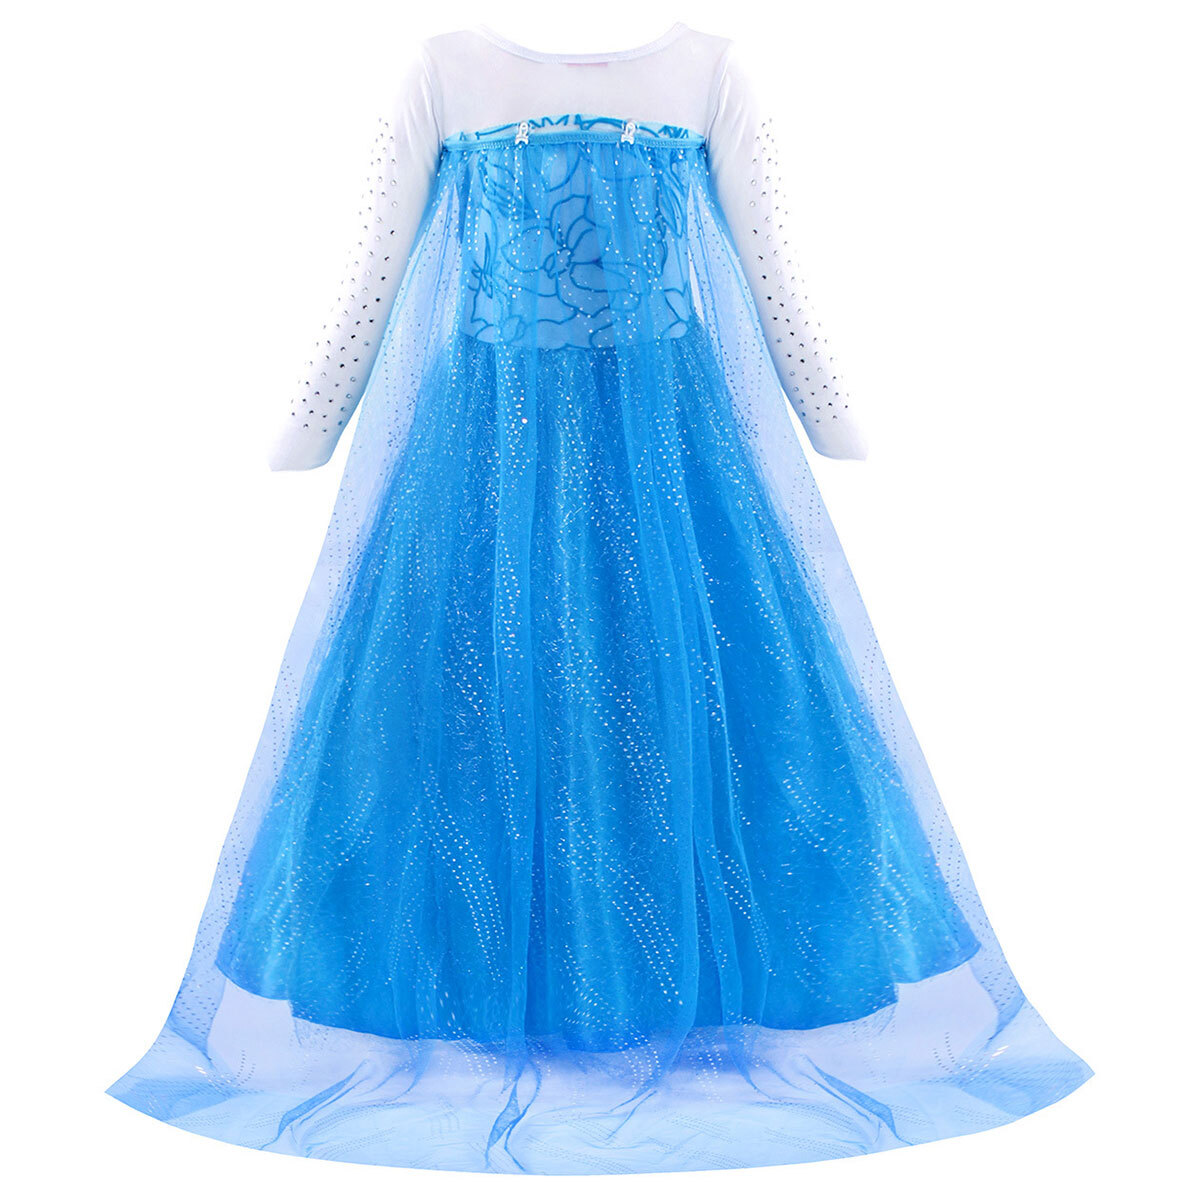 Girls Elsa Costume Princess Dress Birthday Christmas Halloween Party Dress up - image 4 of 8